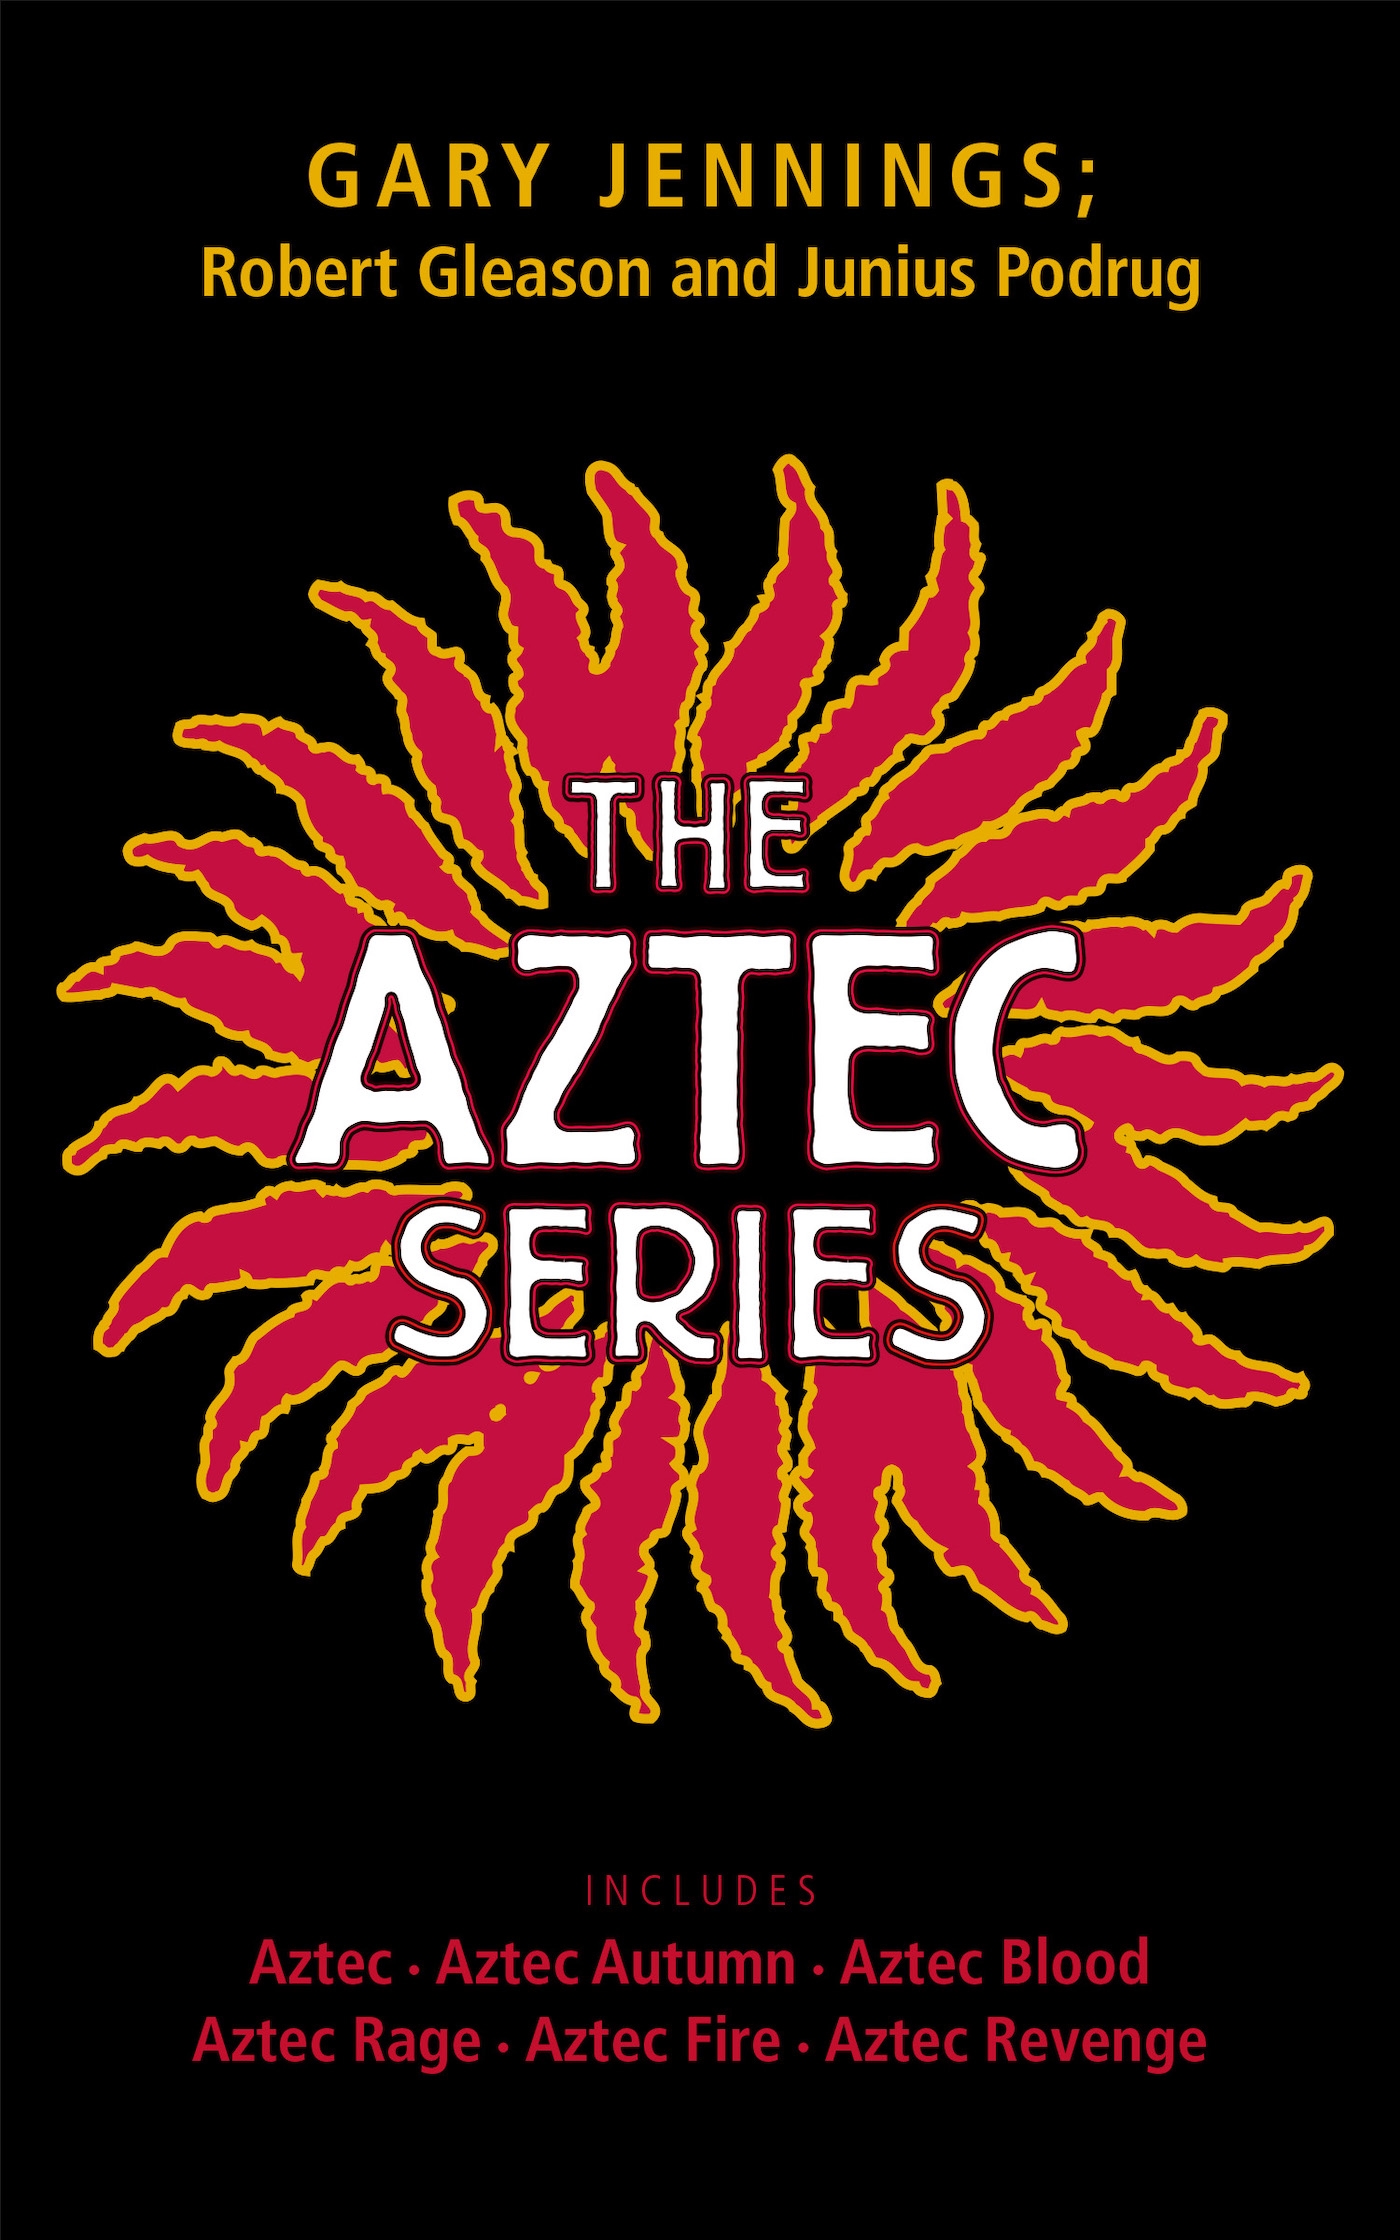 Aztec Series : Aztec, Aztec Autumn, Aztec Blood, Aztec Rage, Aztec Fire, Aztec Revenge by Gary Jennings, Robert Gleason, Junius Podrug